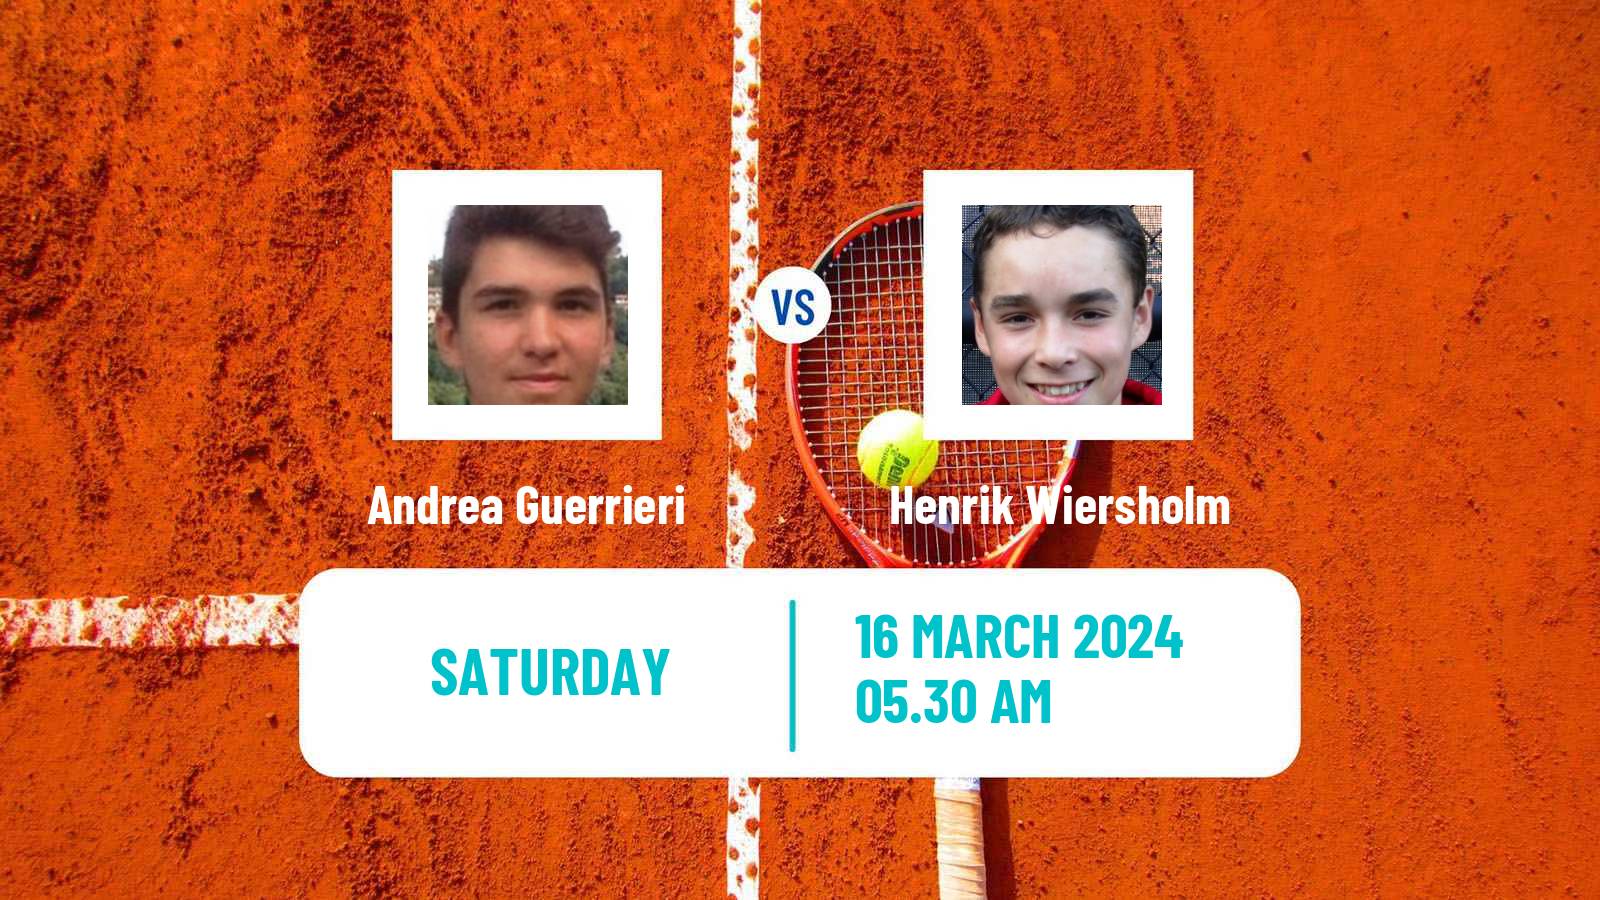 Tennis ITF M15 Heraklion 2 Men Andrea Guerrieri - Henrik Wiersholm